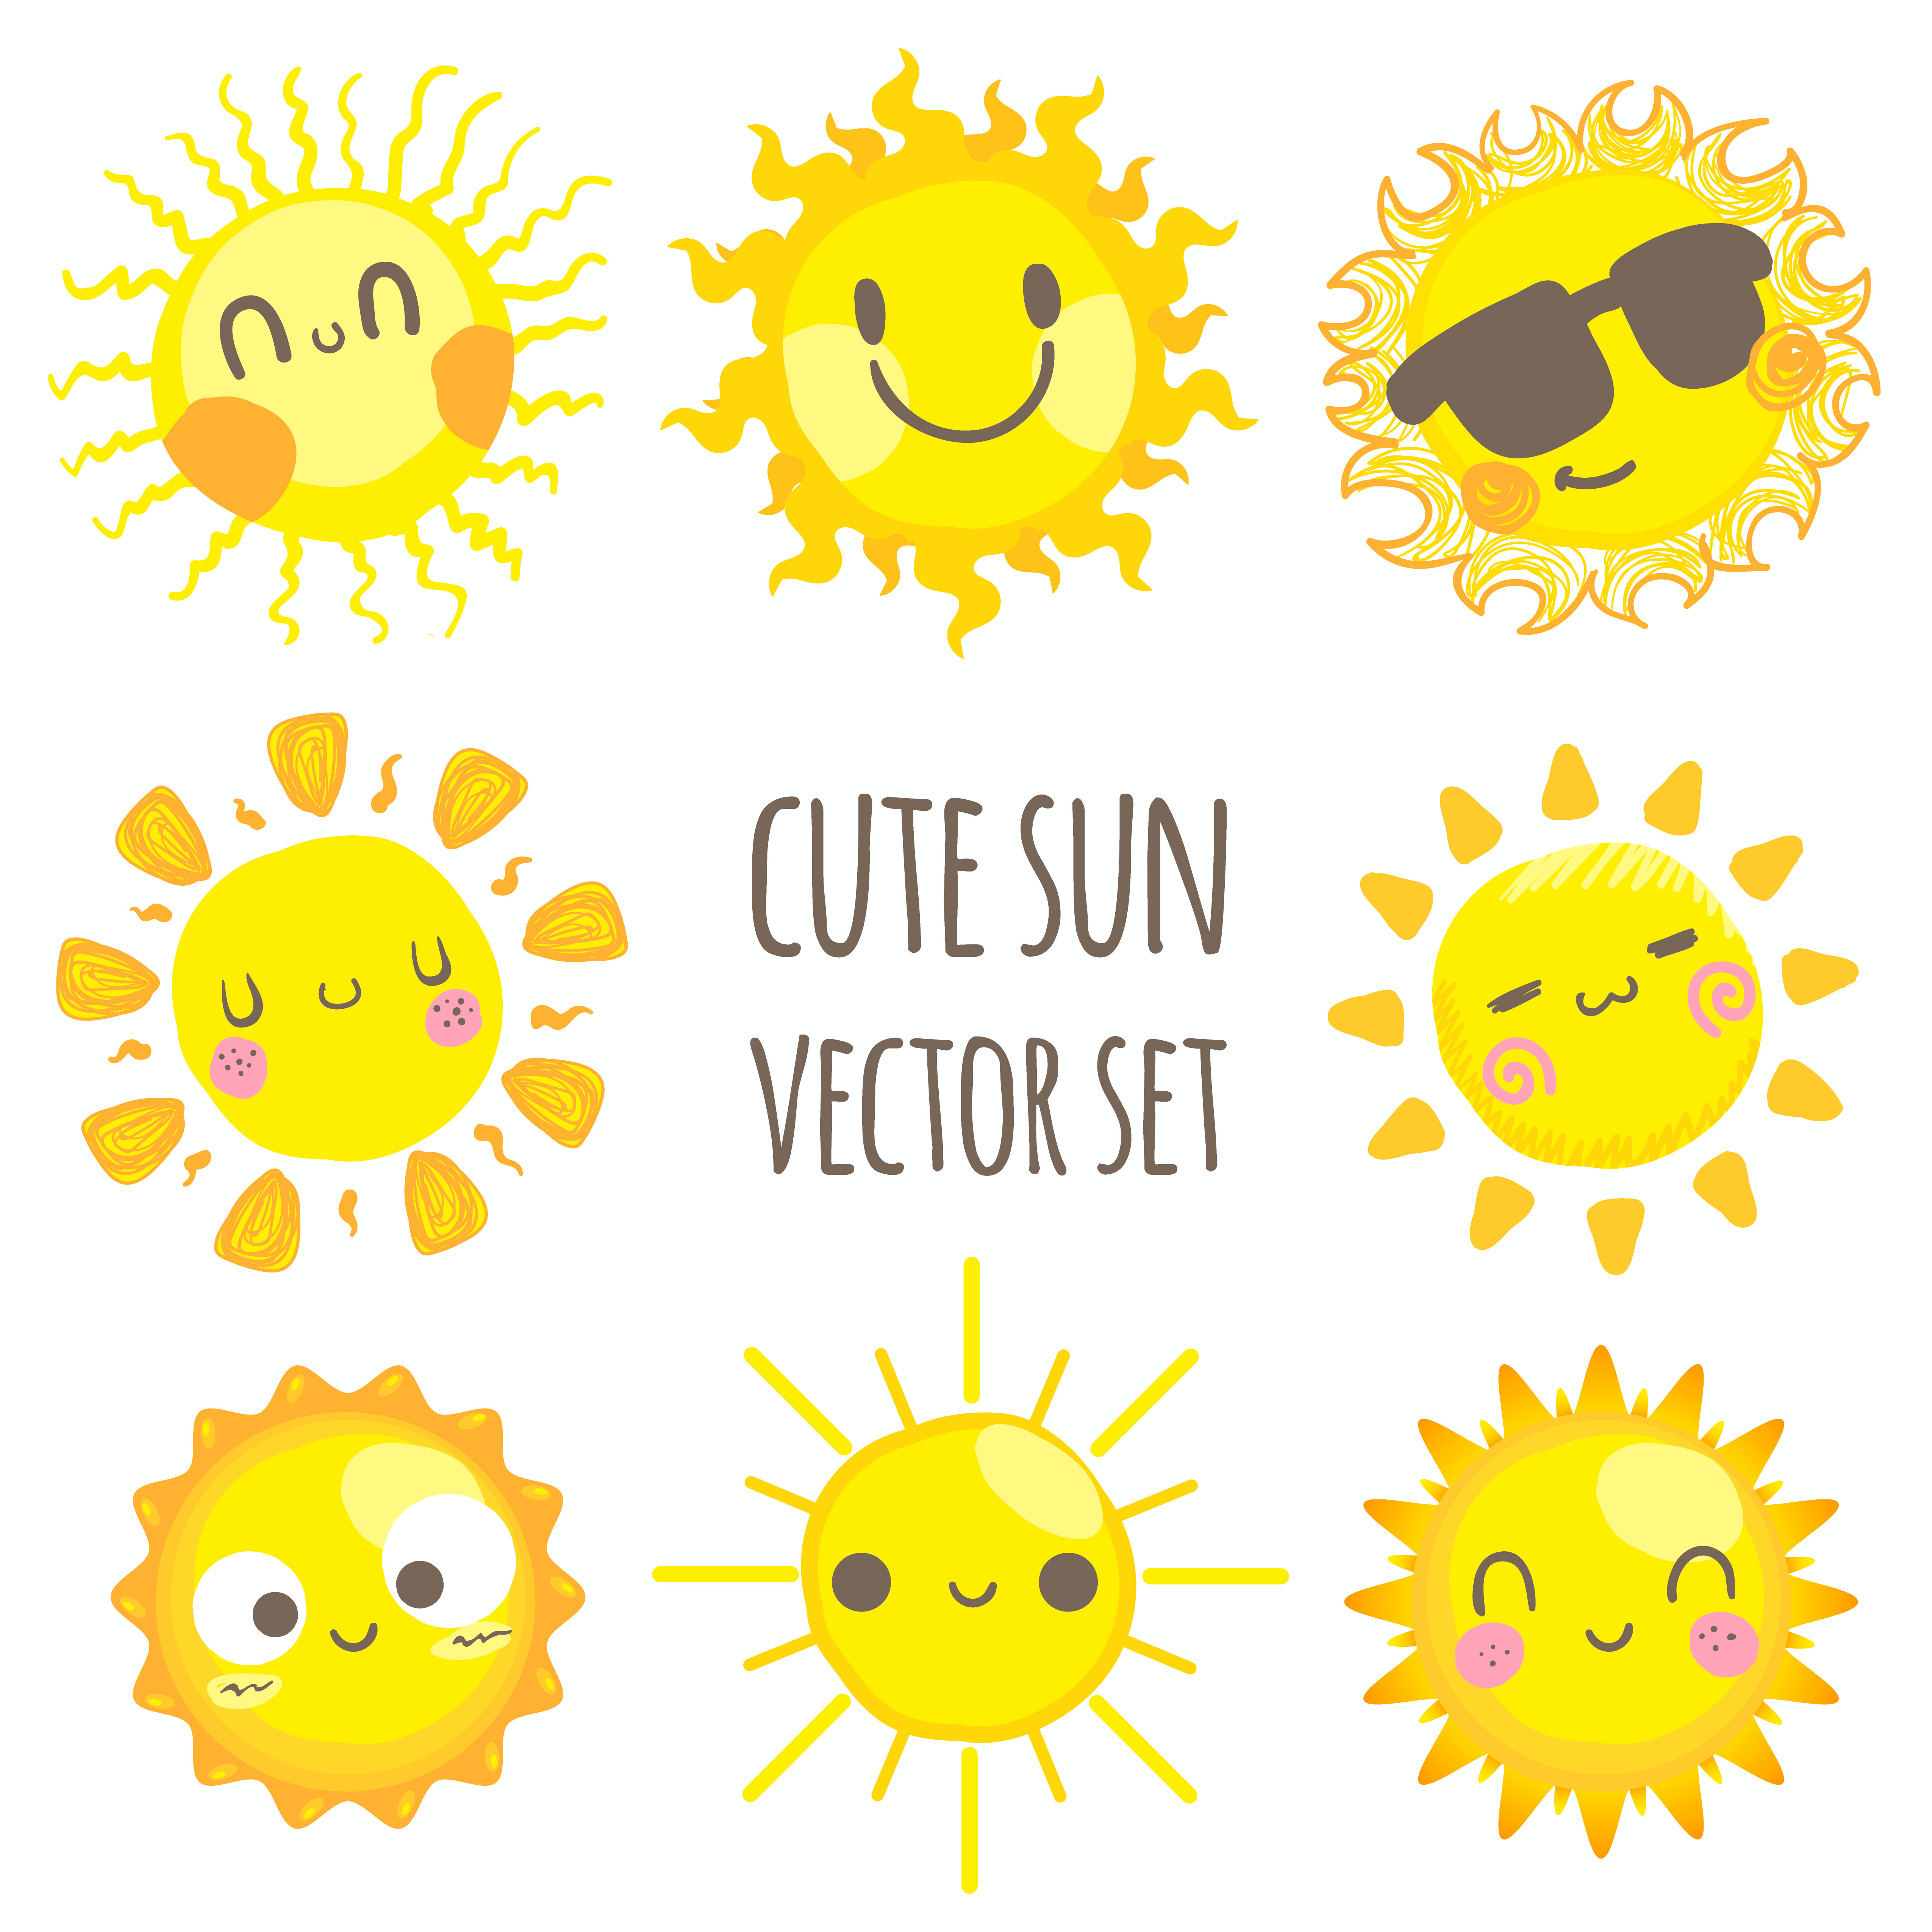 Cute Sun Vector Set 465645 Vector Art At Vecteezy